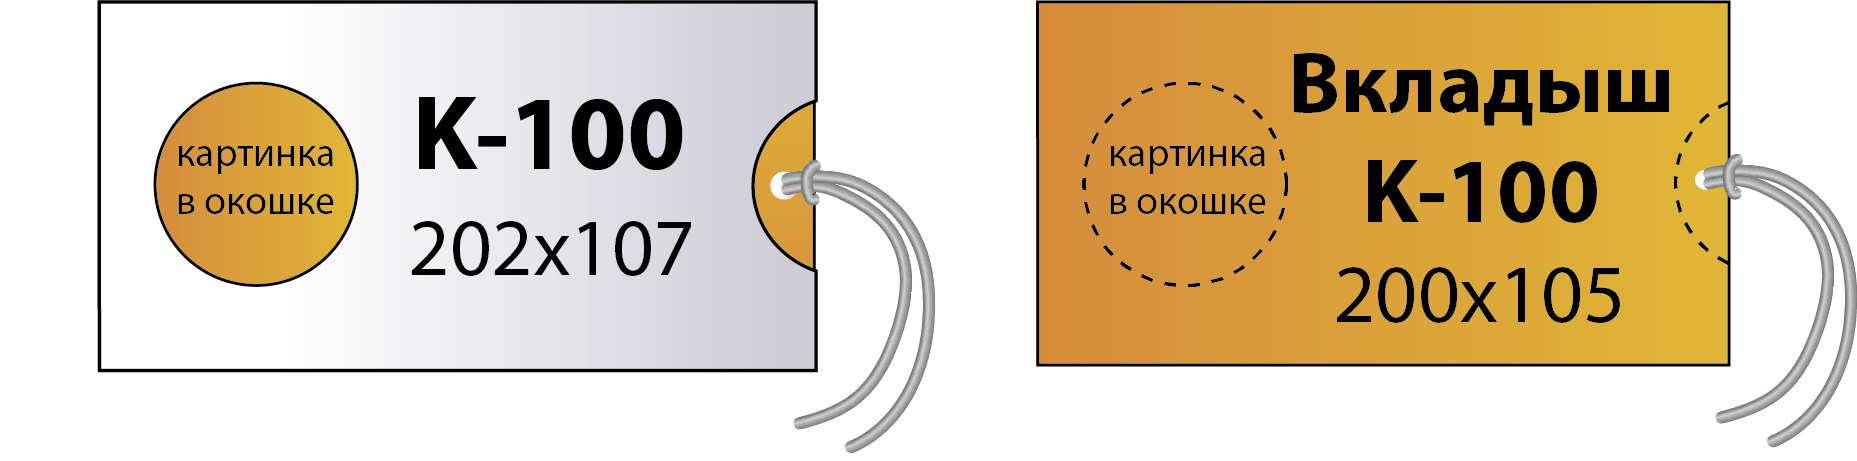 Конверт артикул K-100 евро формат с круглым окошком